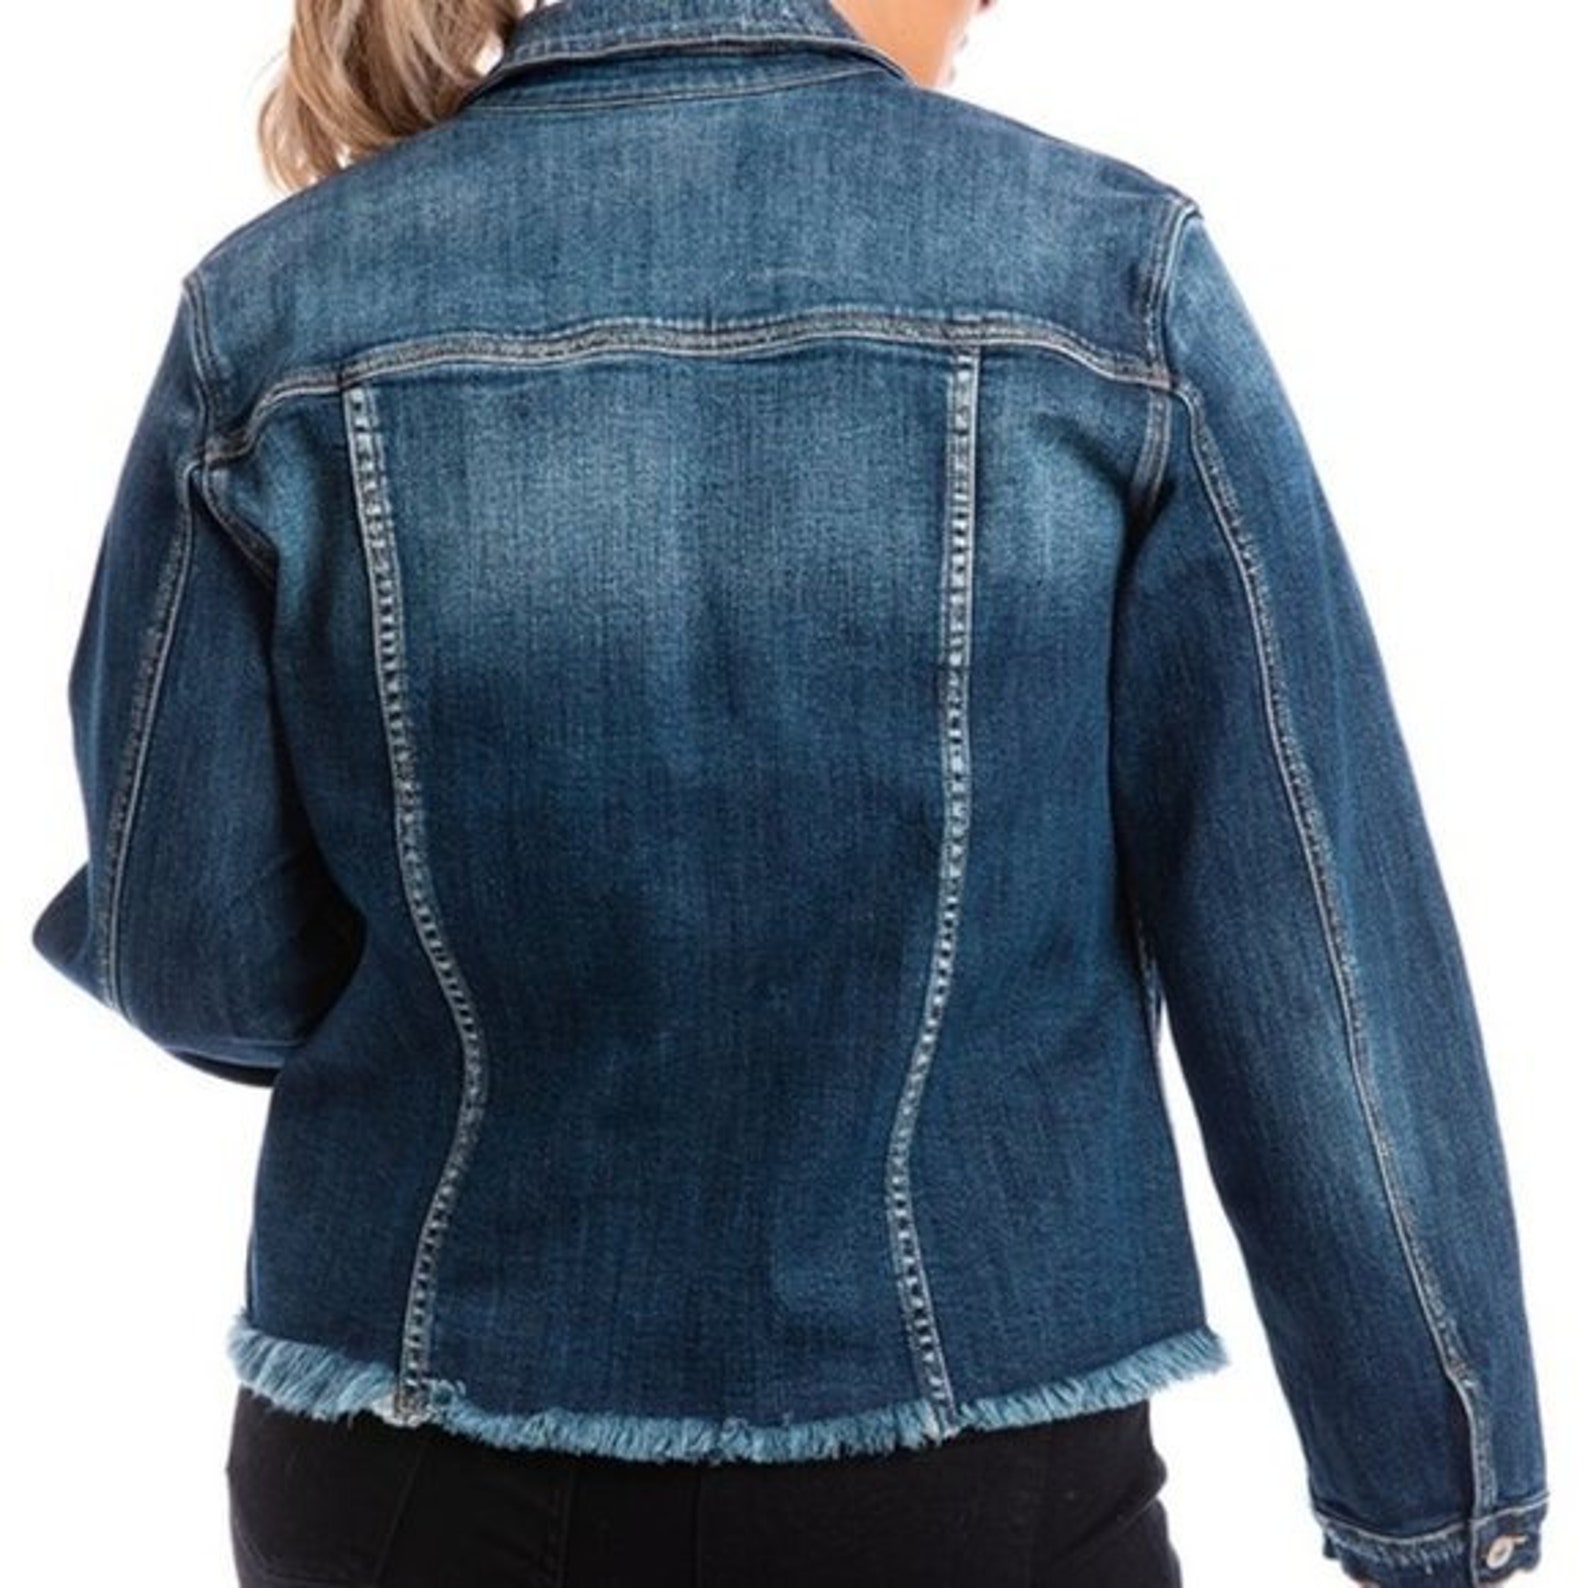 New Kancan Denim Jean Jacket Coat Darker Wash Wardrobe Staple - Etsy